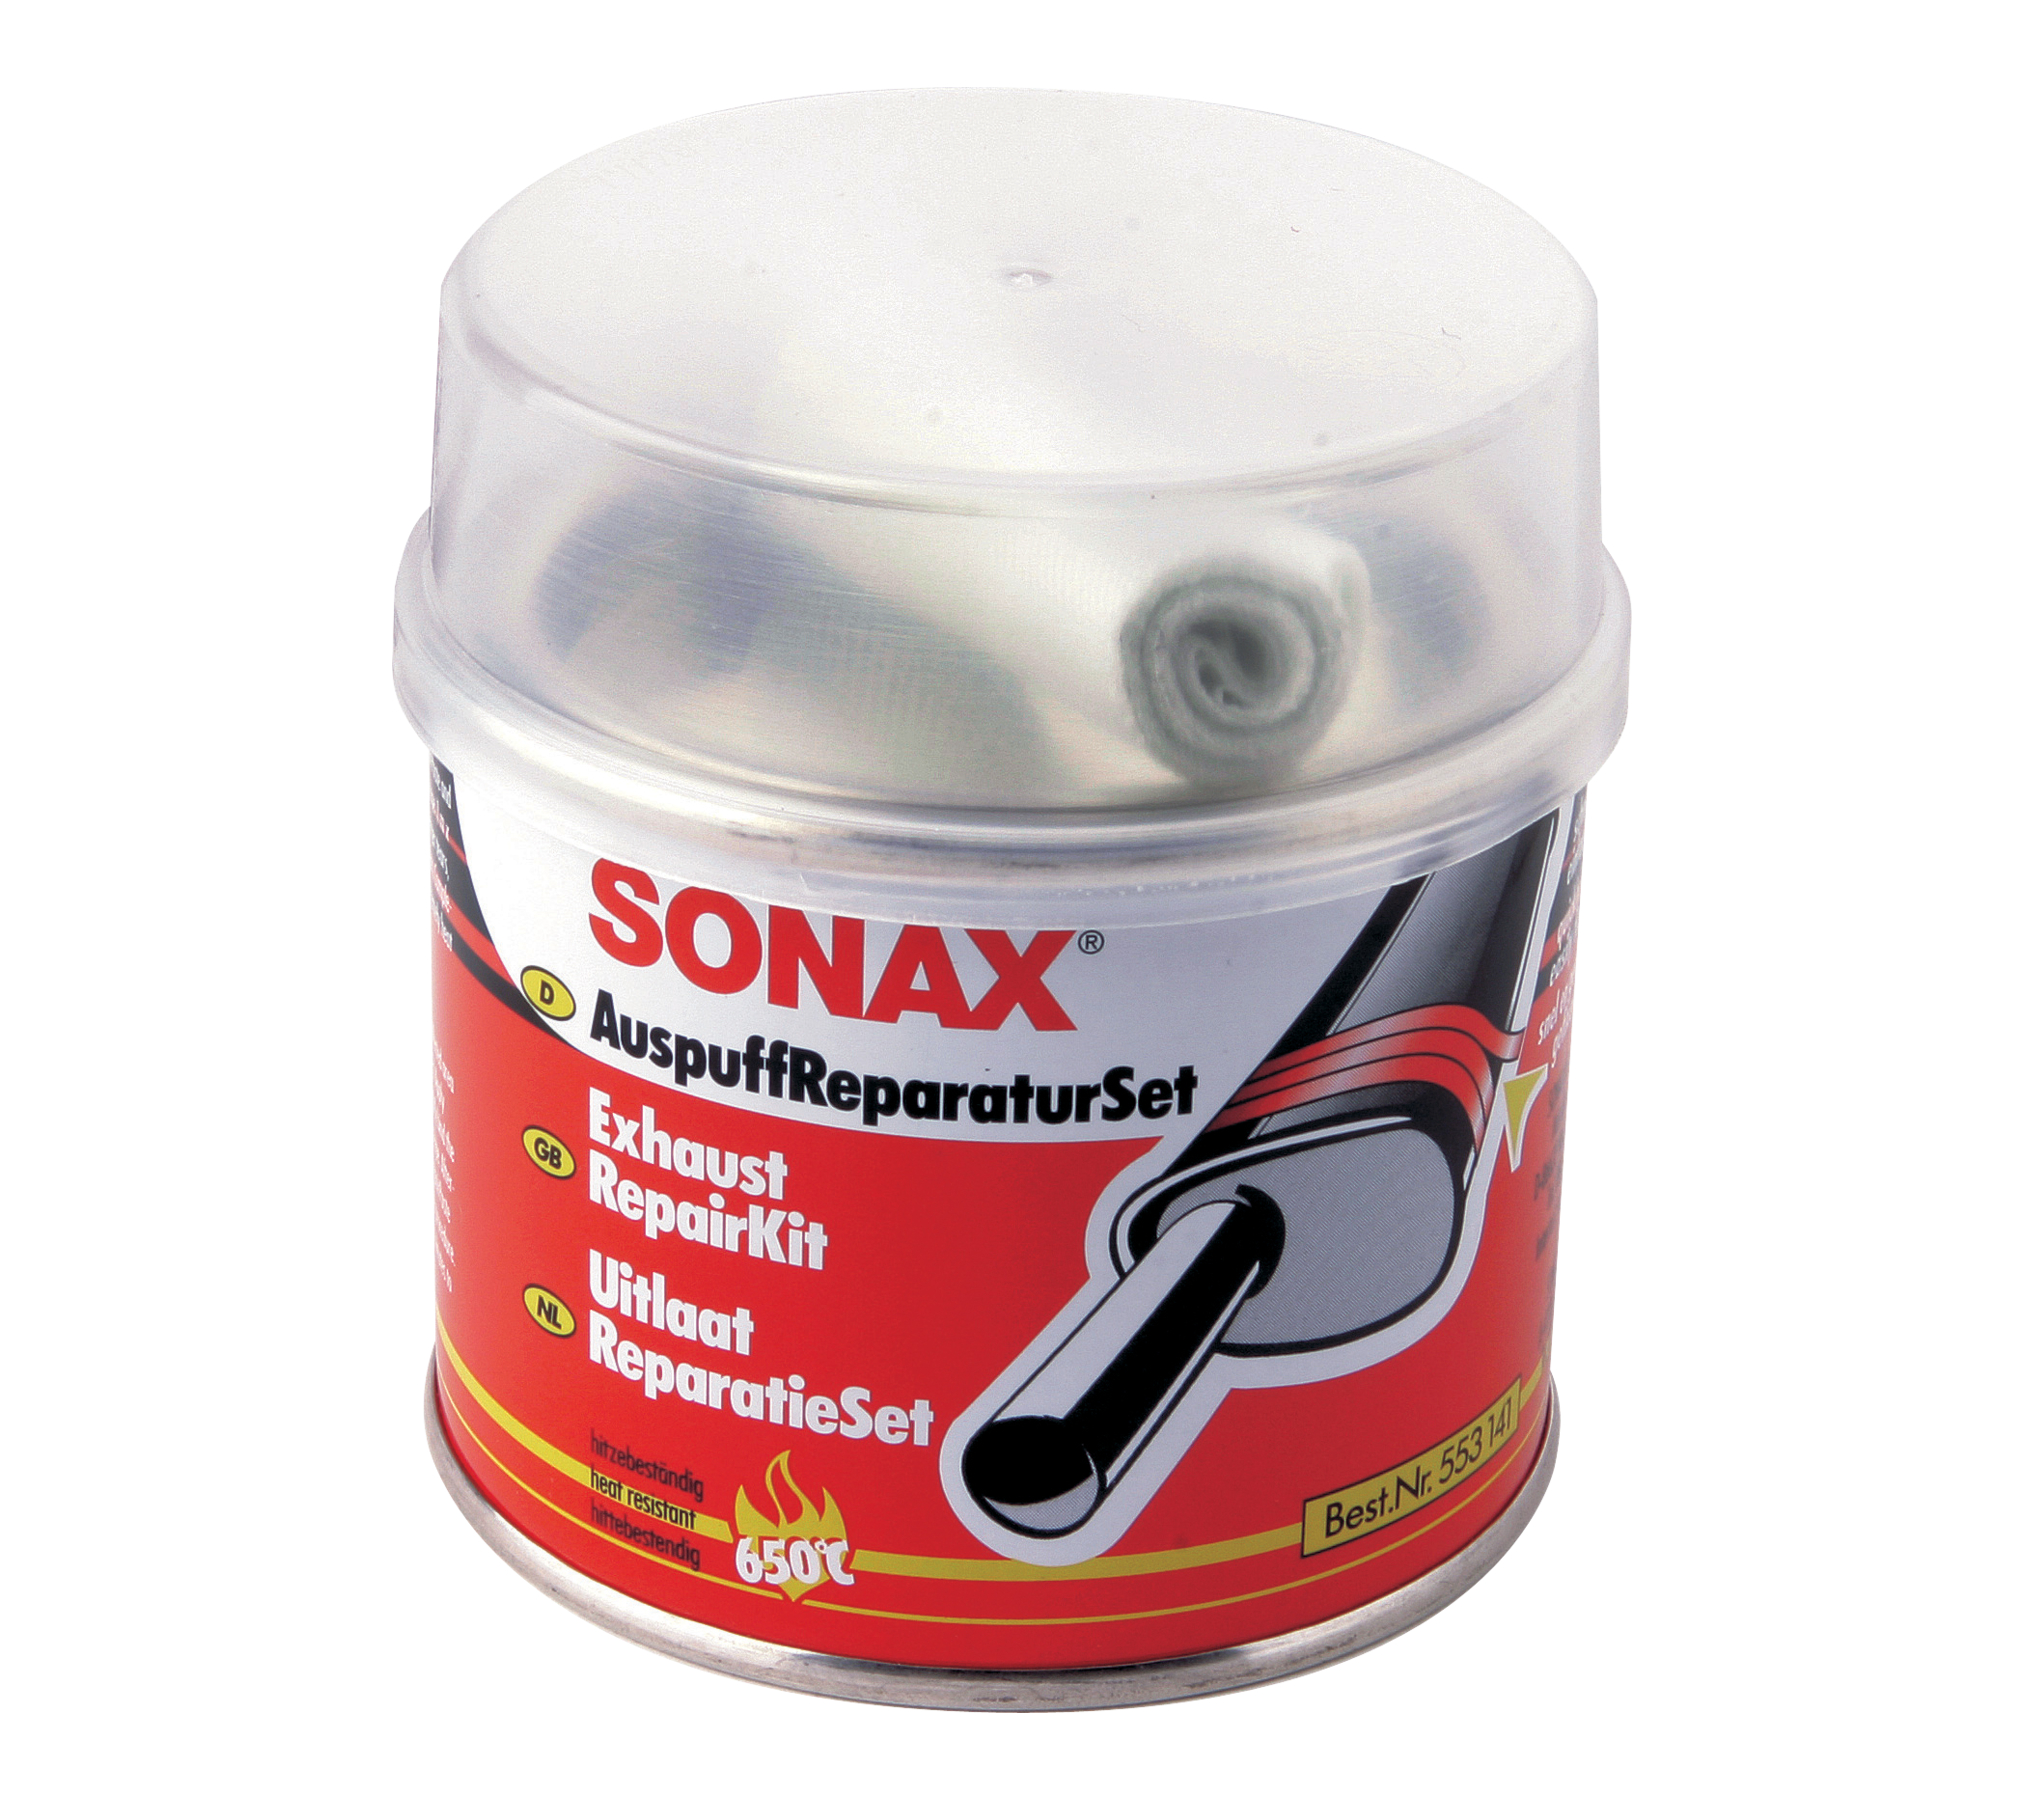 SONAX Auspuff-ReparaturSet 200 g